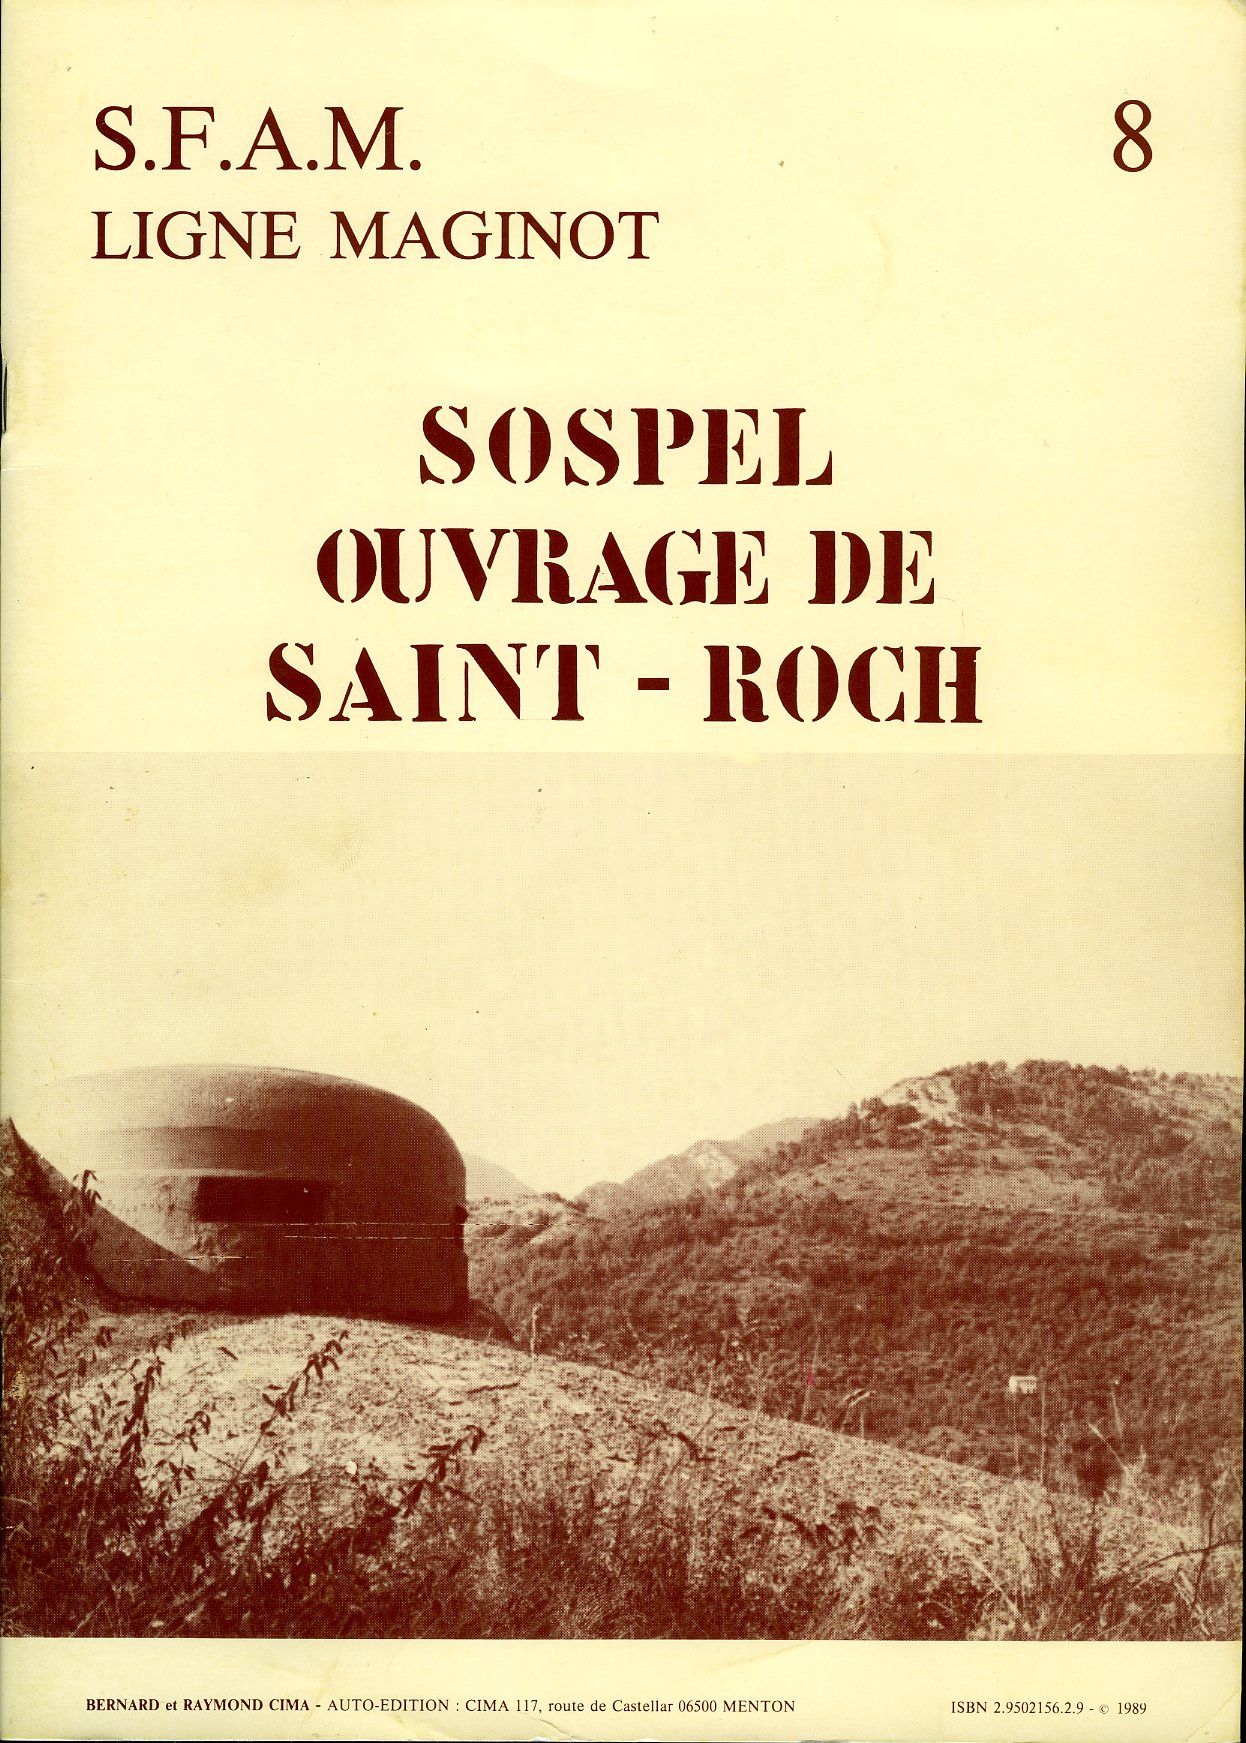 SFAM Ligne Maginot N°8 - Sospel, Ouvrage de Saint-Roch - CIMA, Bernard et Raymond